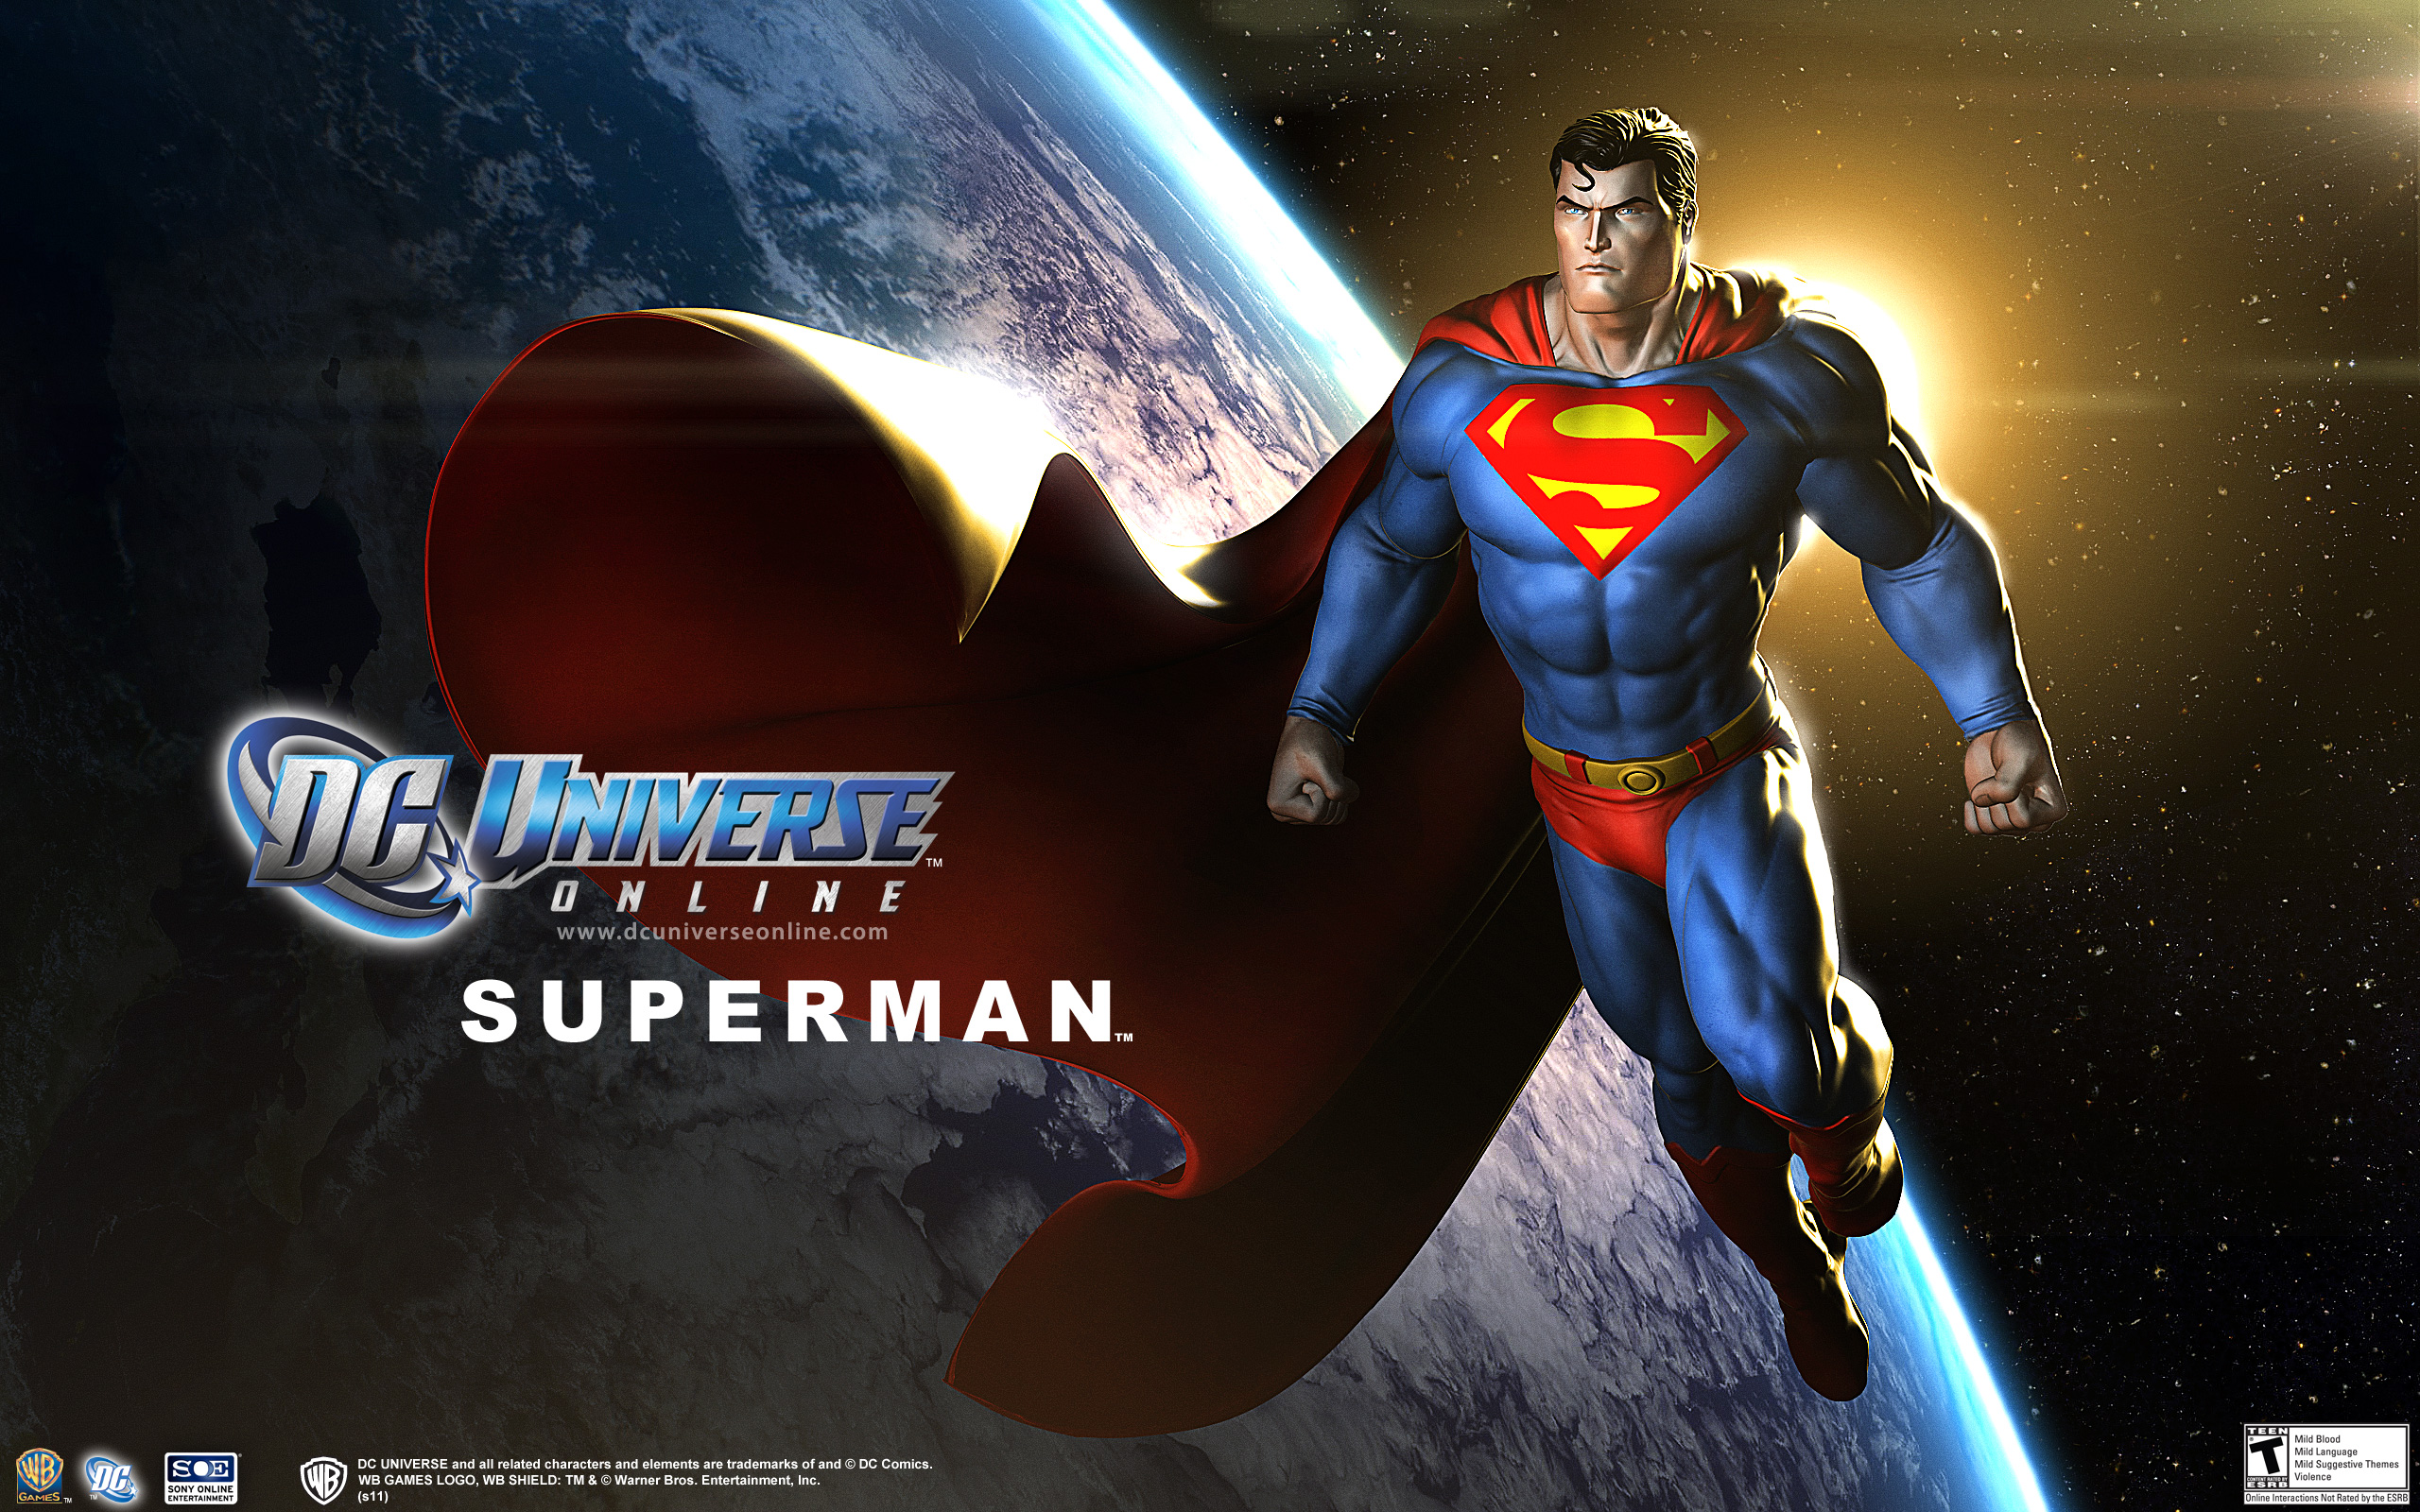 dc universe wallpaper,superhero,superman,fictional character,hero,action figure